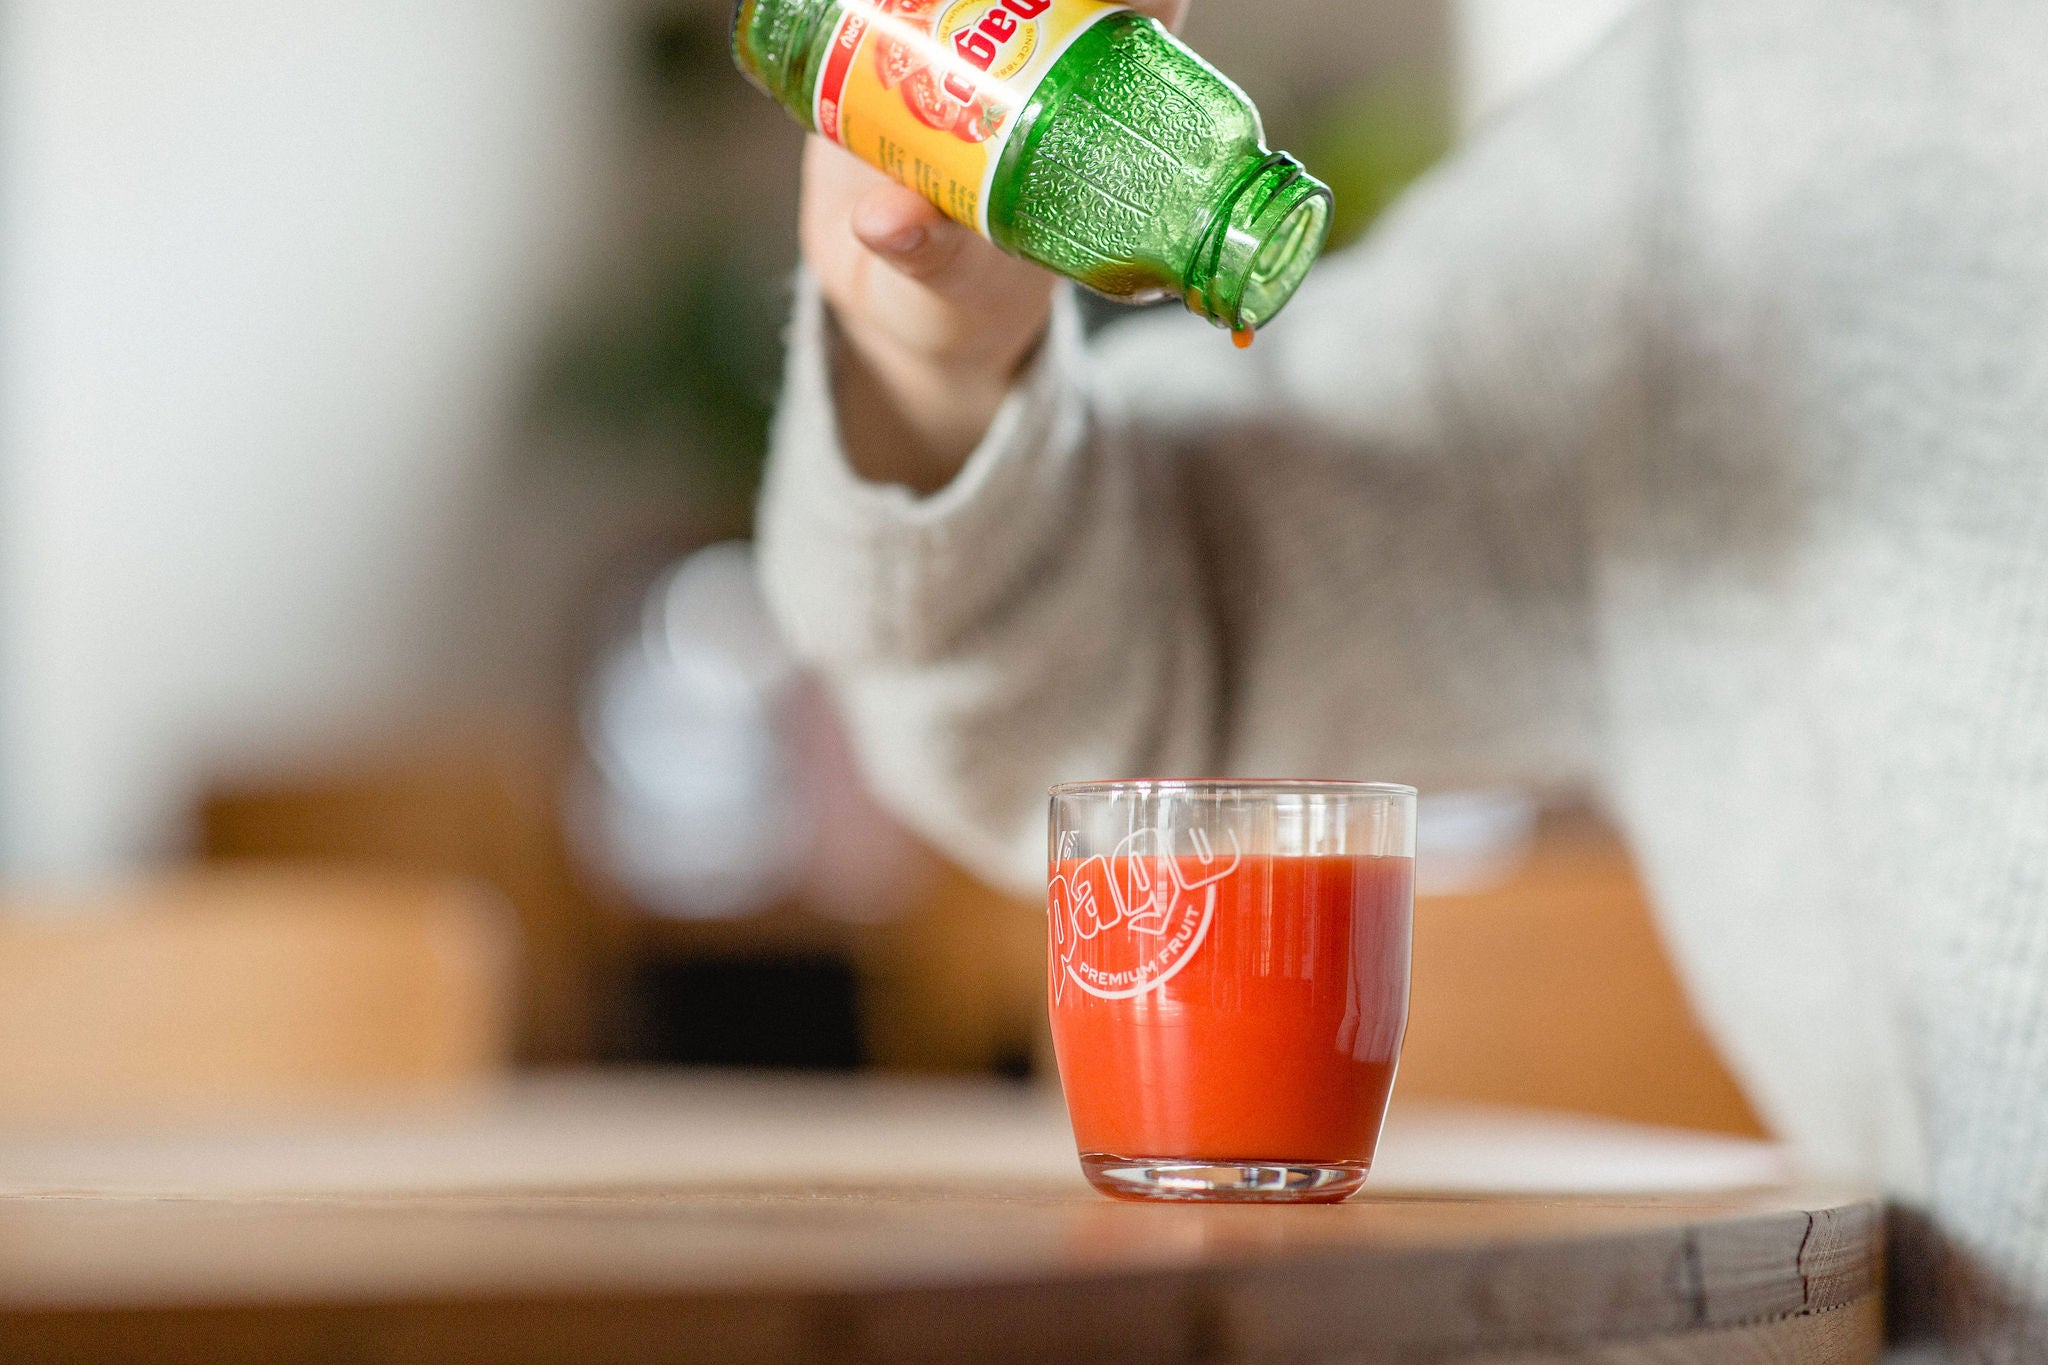 Pago Tomato Juice (Single Bottle) - Pago Premium Fruit Juice Store